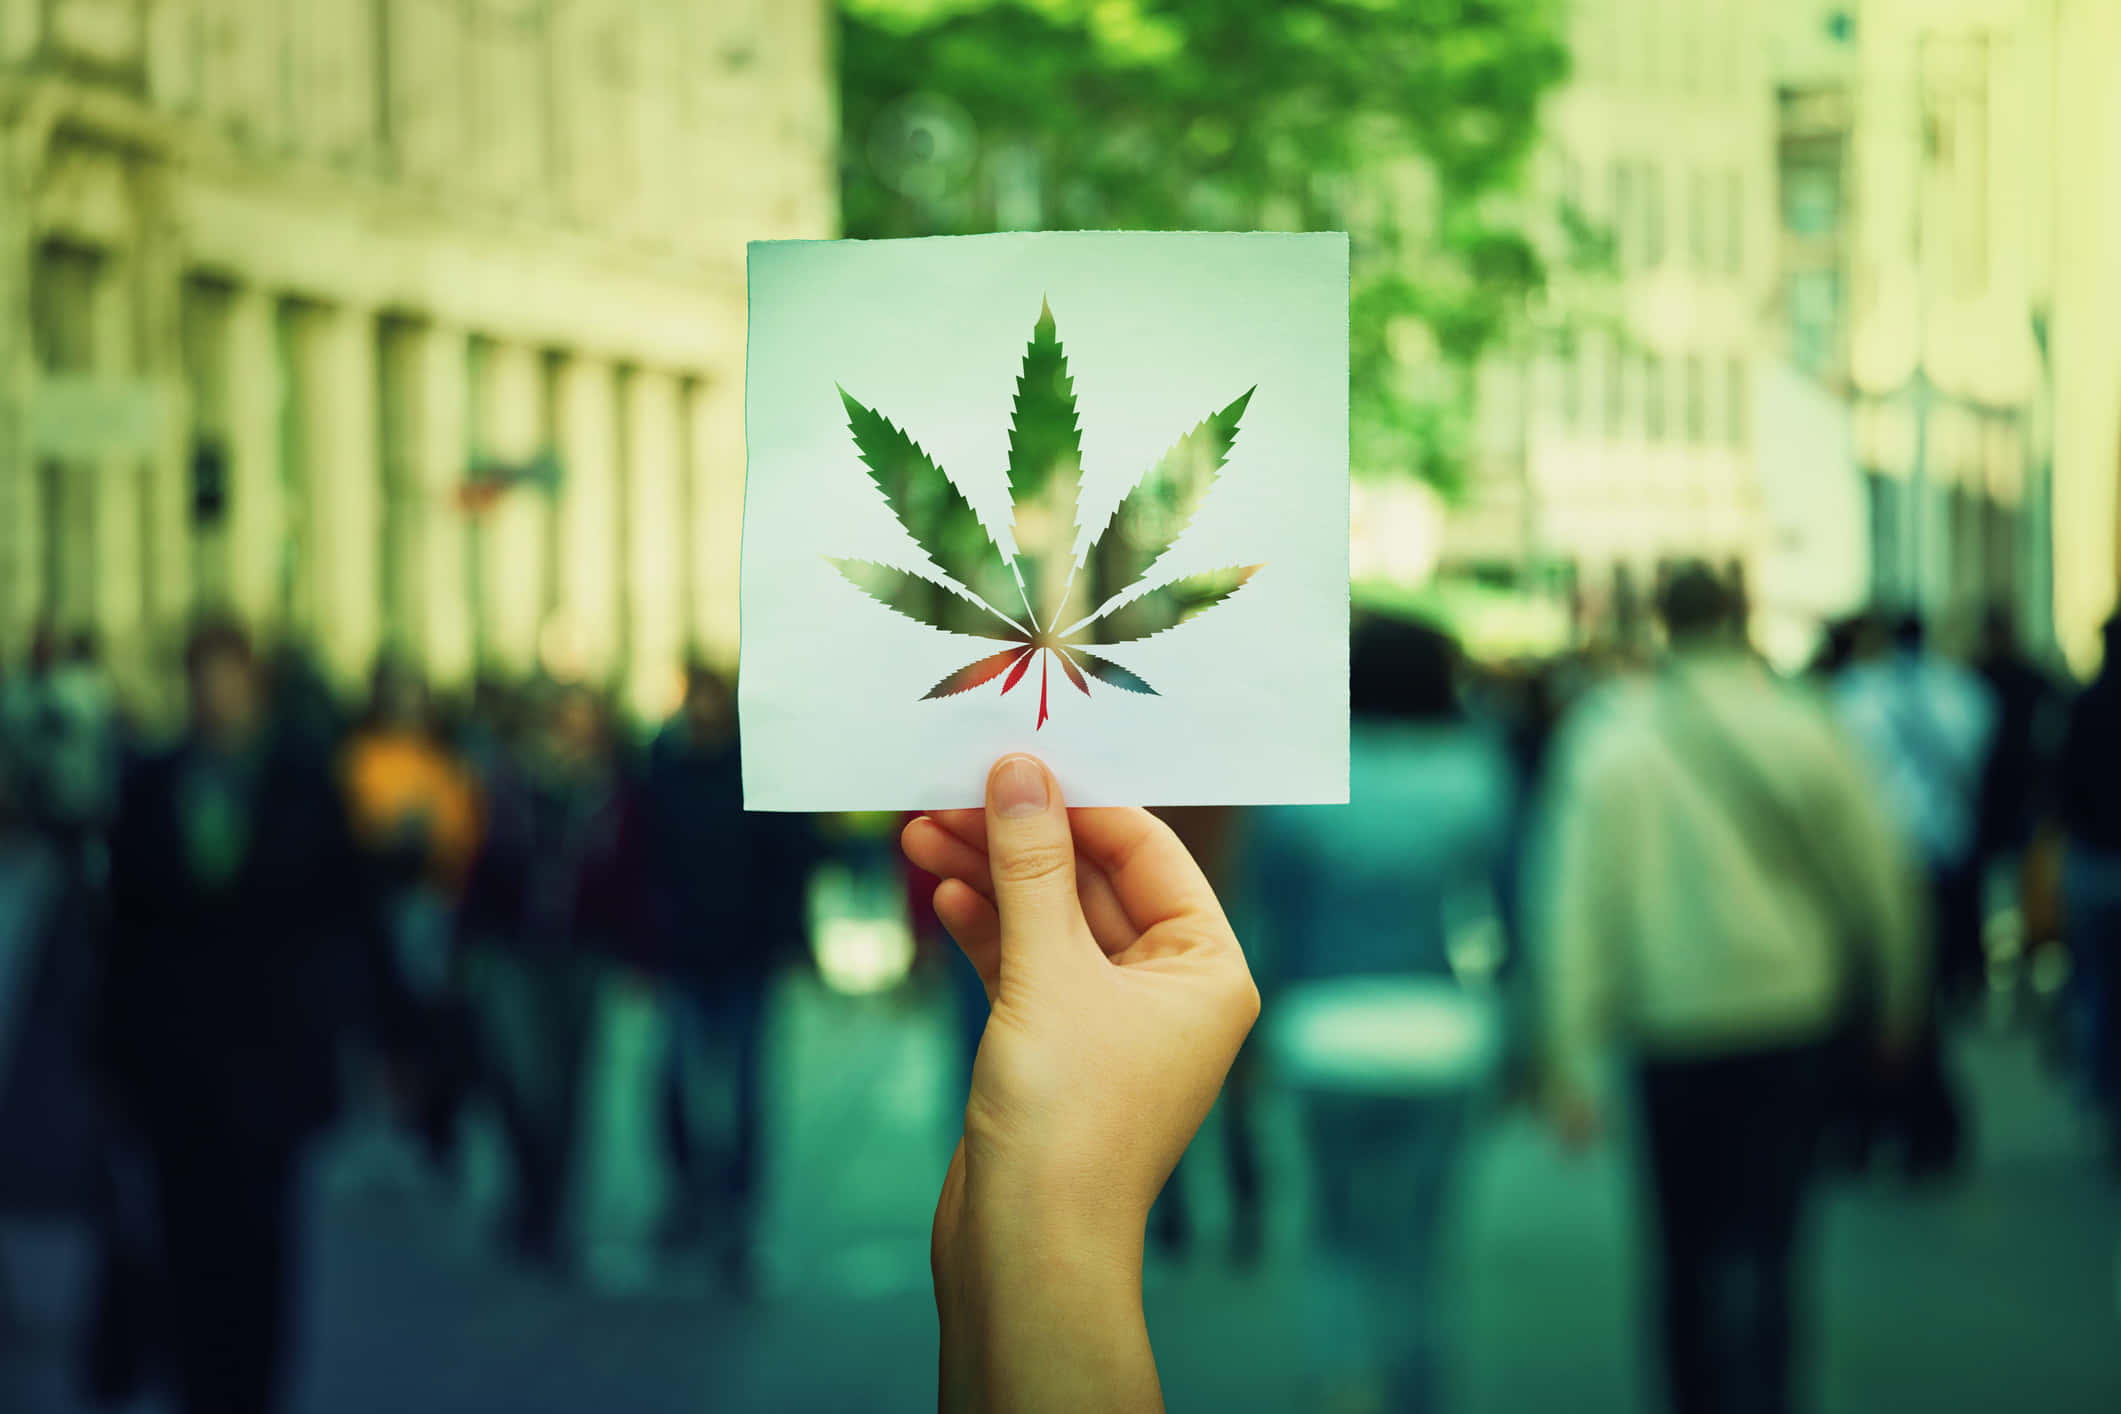 A close-up view of vibrant marijuana leaves